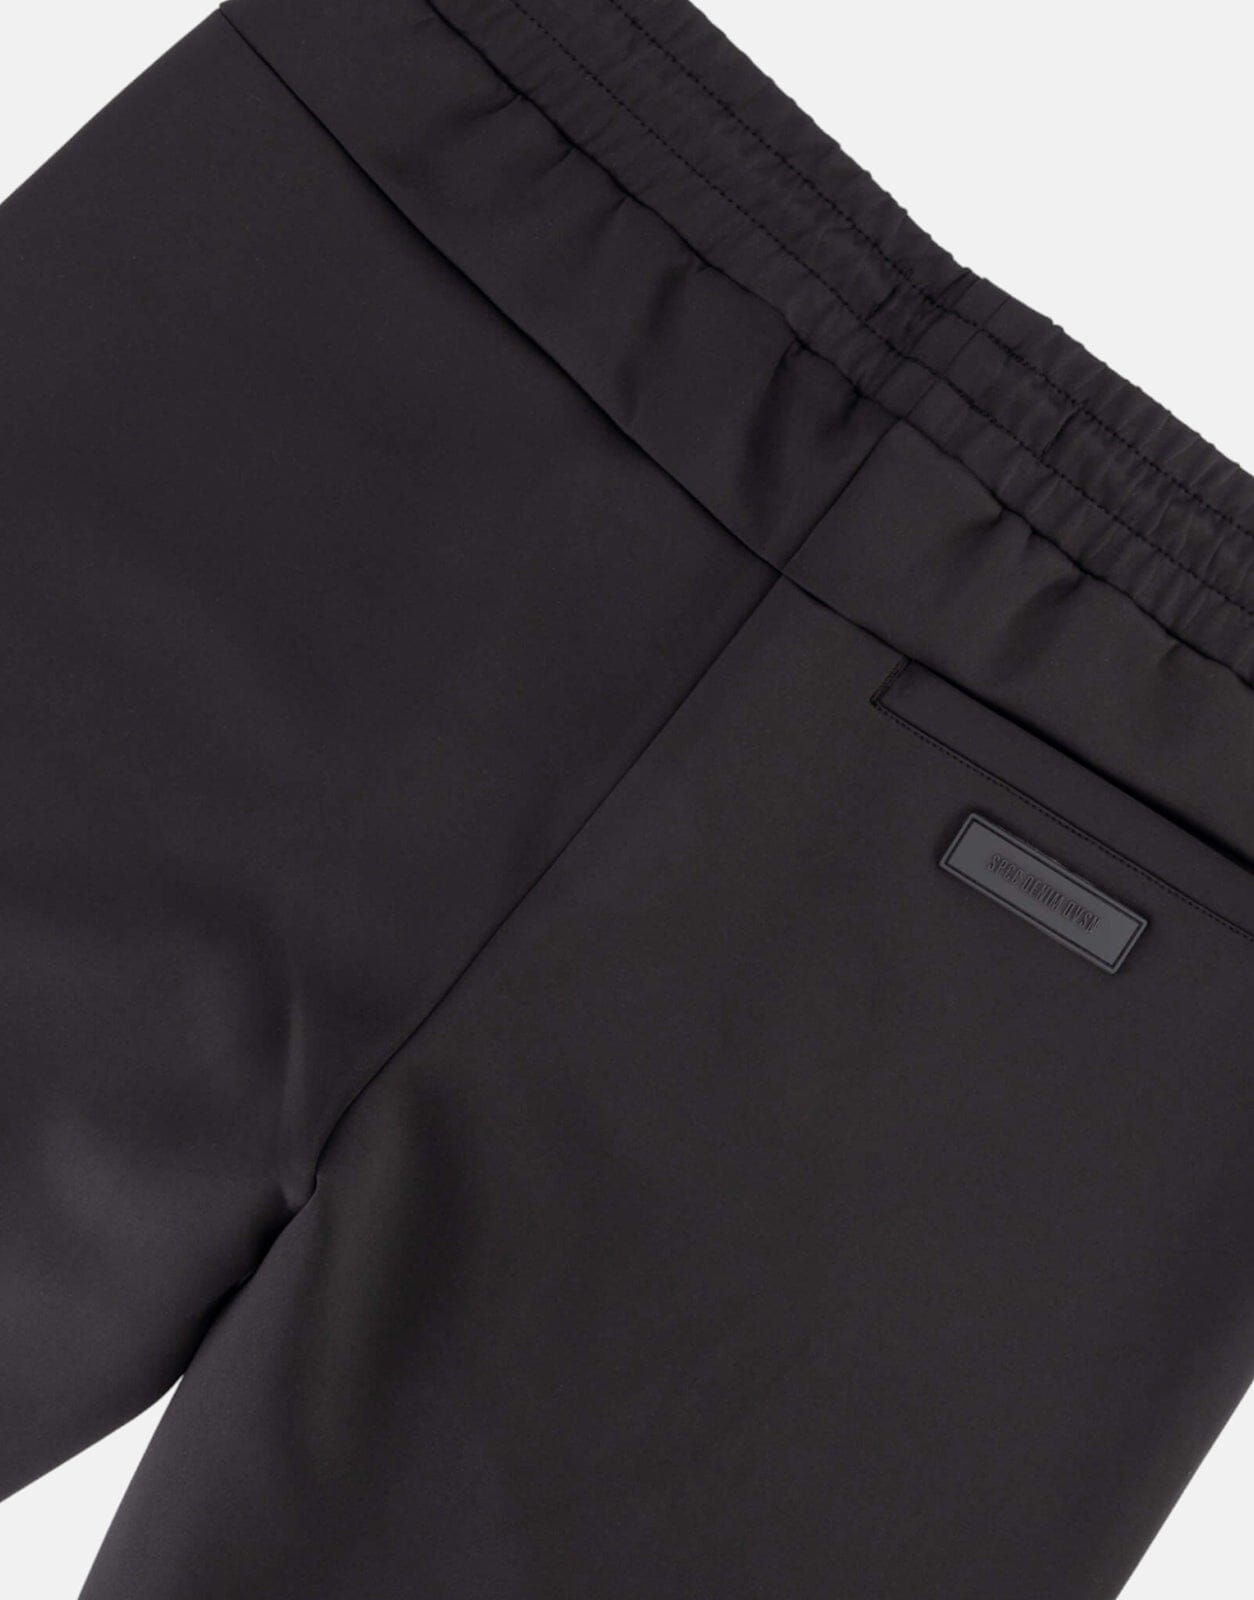 SPCC Sark Black Sweatpants - Subwear